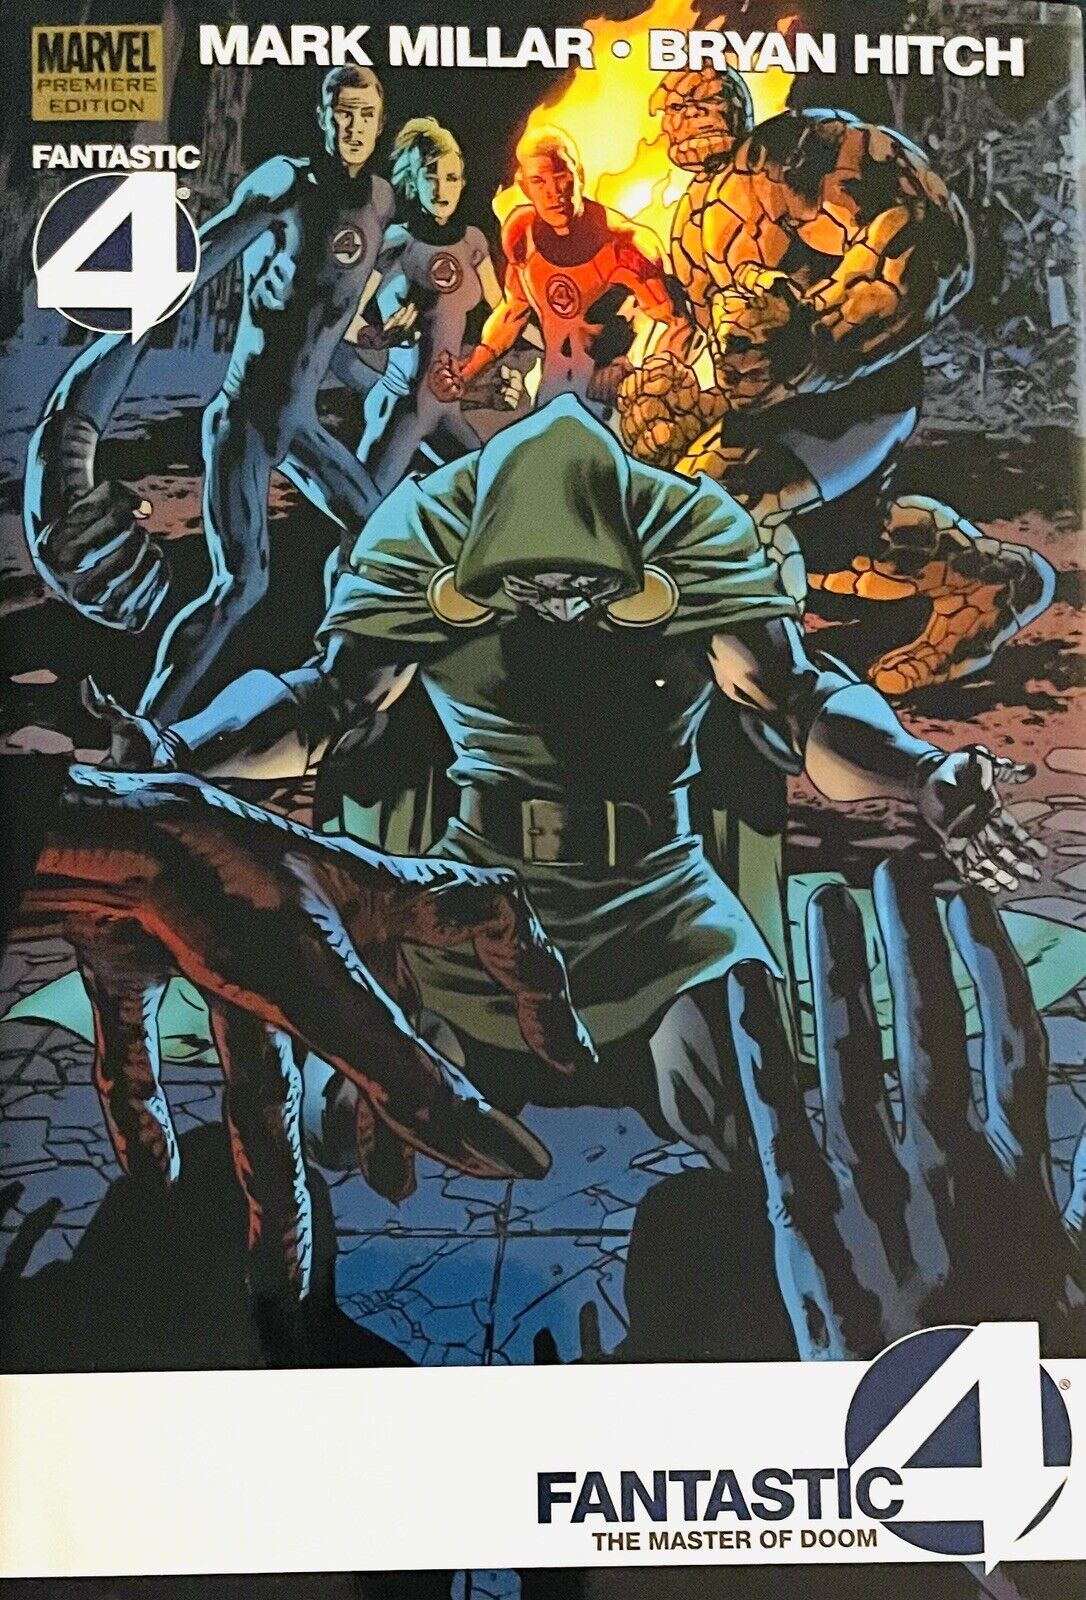 Fantastic Four Master of Doom Marvel Premiere Edition (Hardcover)